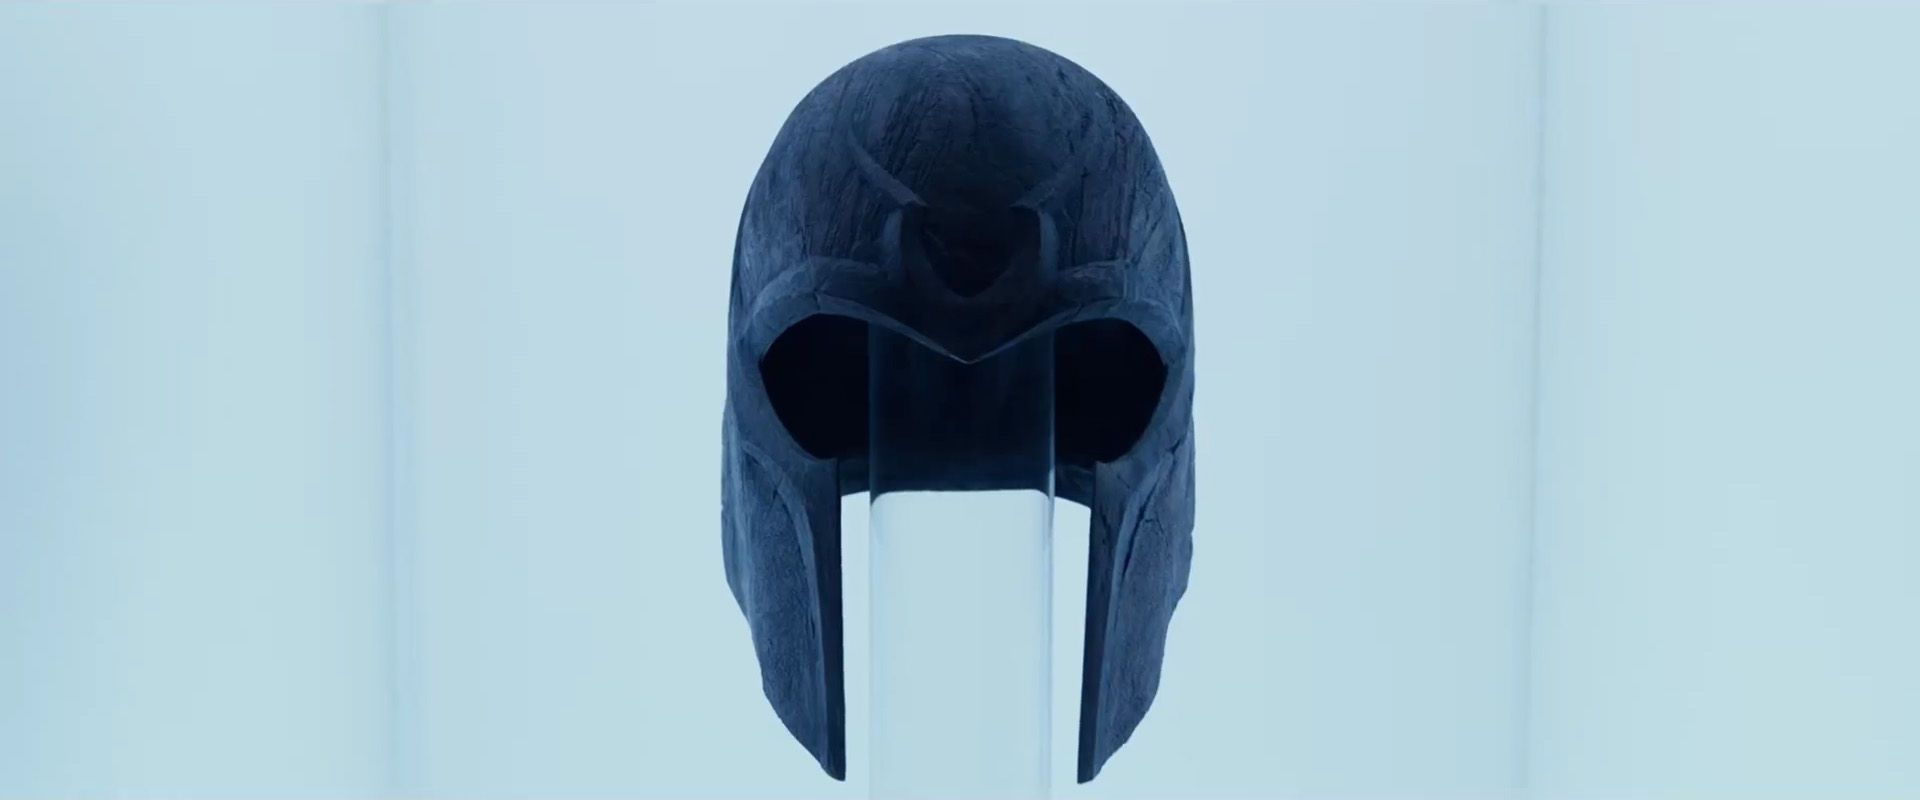 X-Men Days of Future Past Trailer - Magneto Helmet